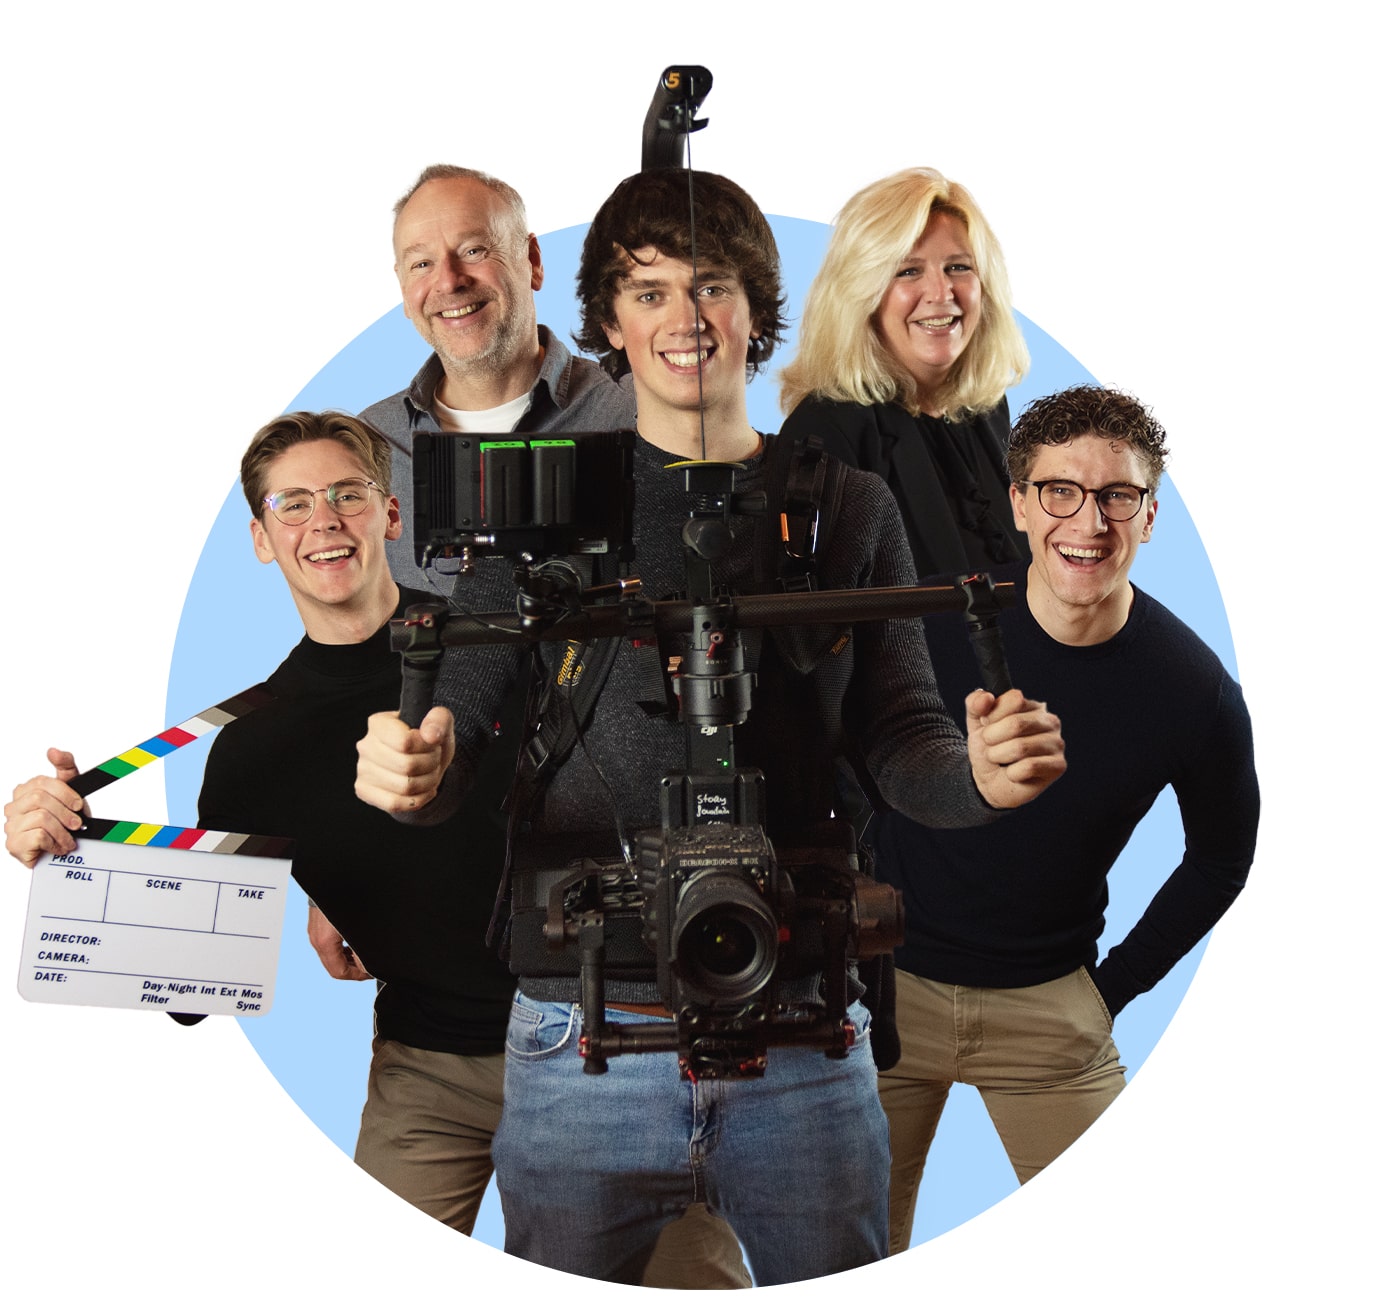 Team IVC - International Video Company